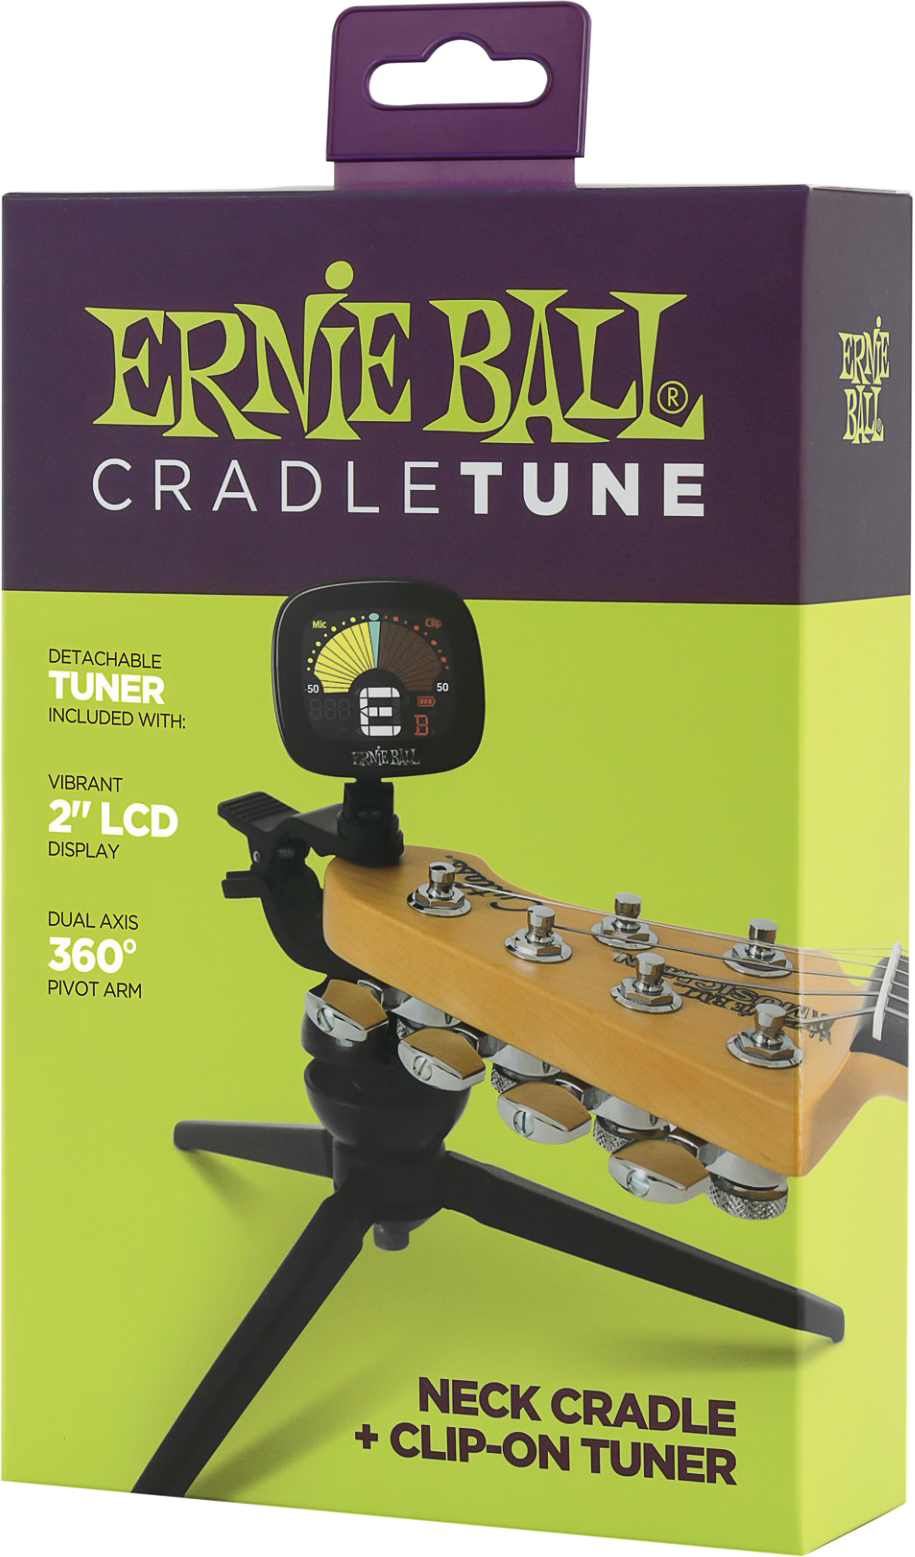 Ernie Ball Accessories CradleTune Packaging